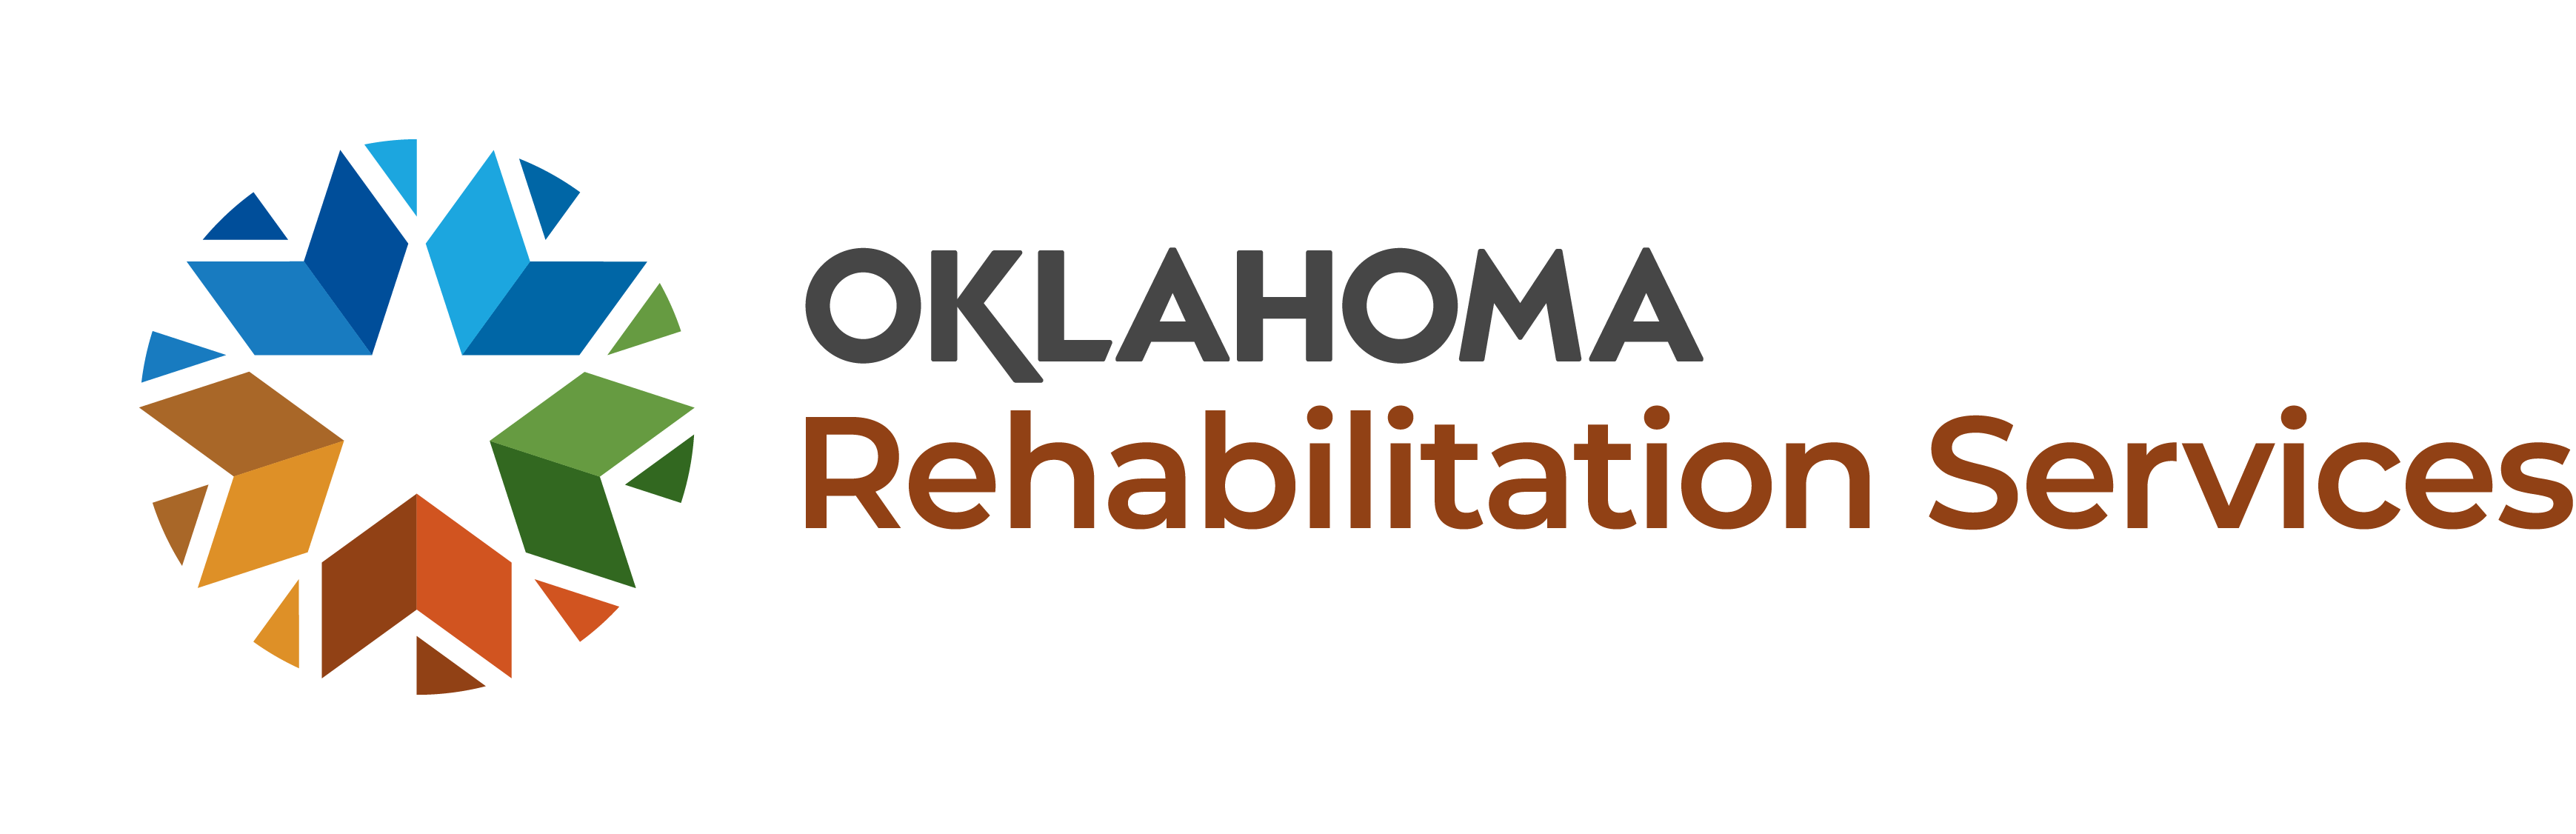 Rehabilitation center filled gradient logo Vector Image